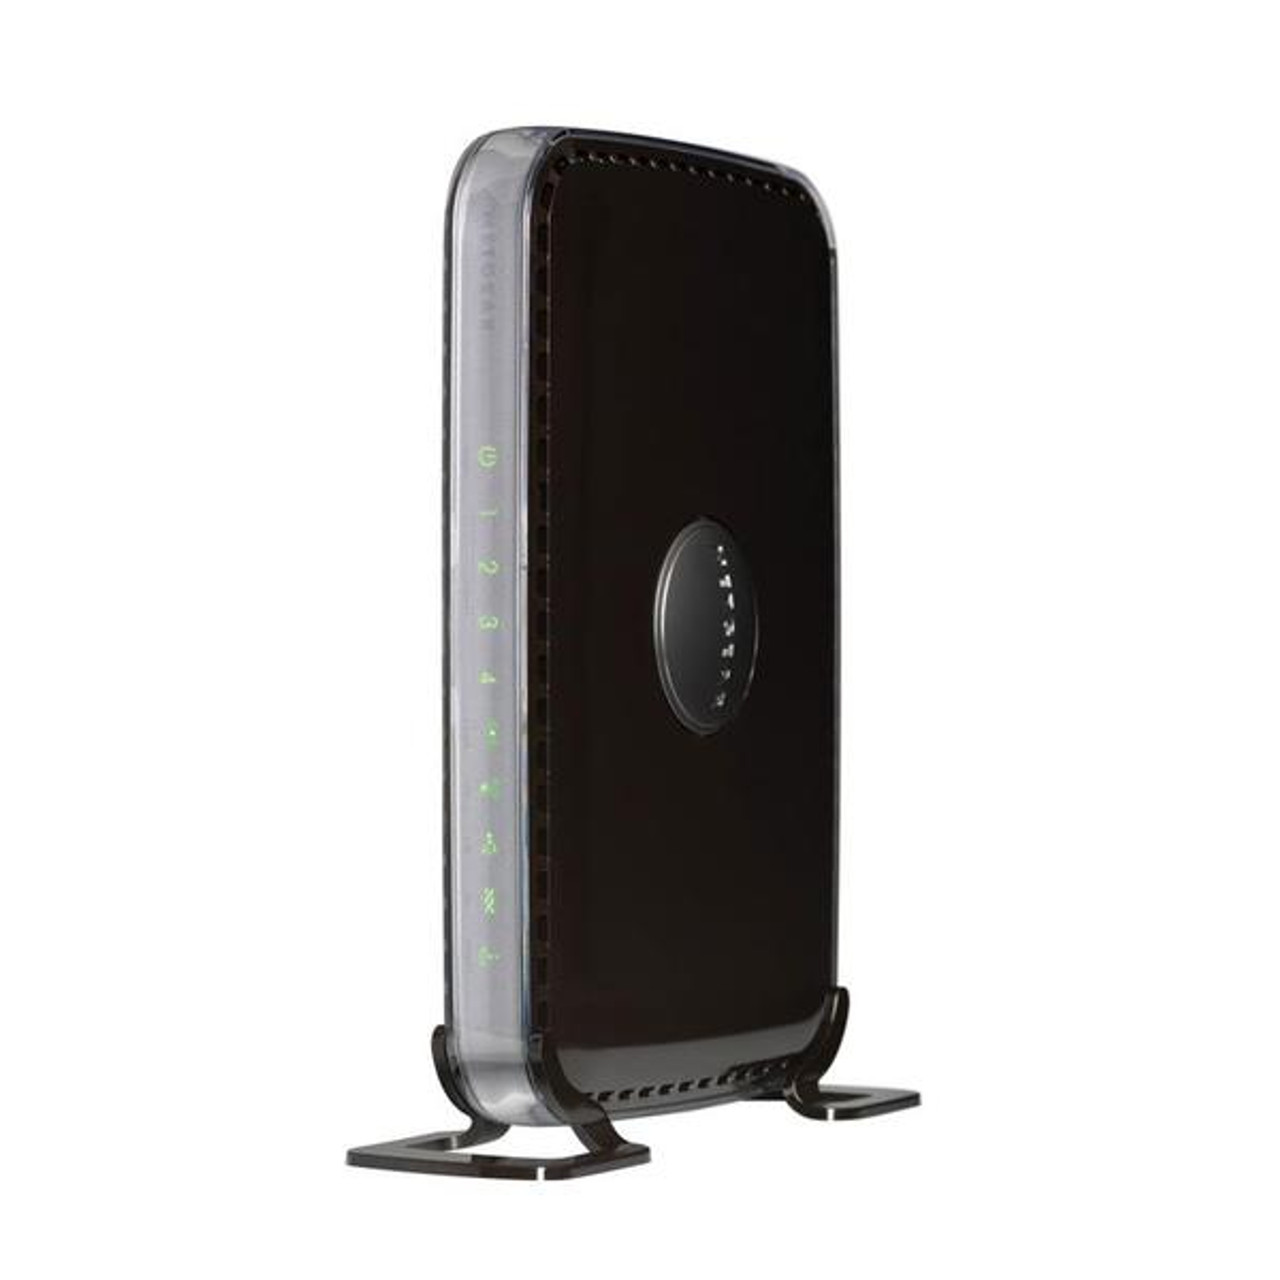 0712219 NetGear Rangemax Dgn3500 Wireless Router Ieee 802.11n (Refurbished)